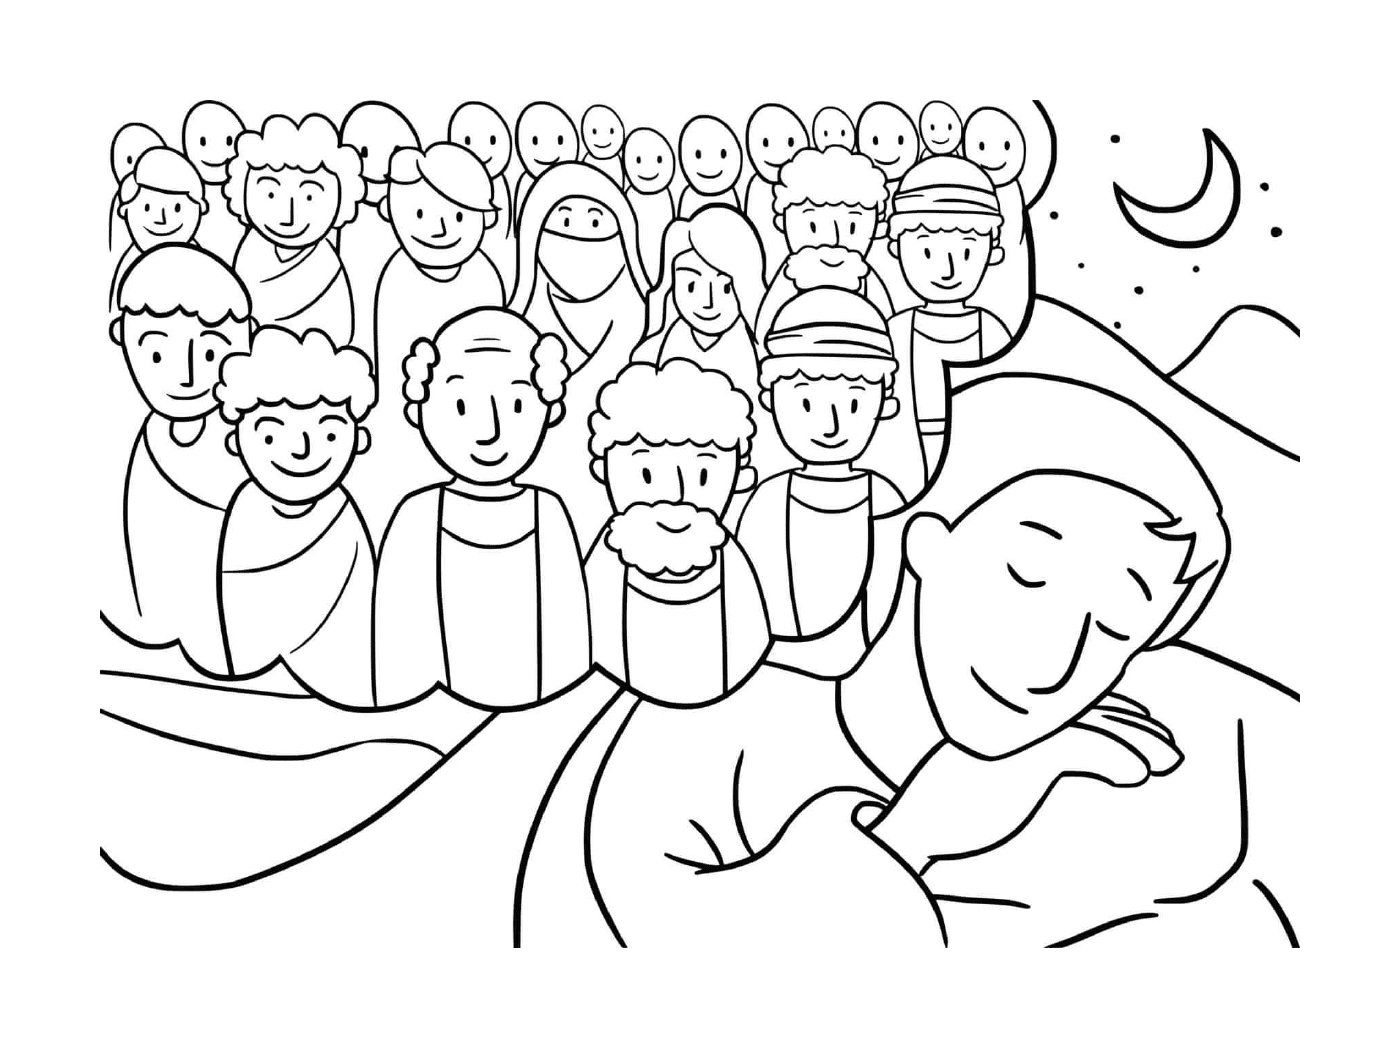  Group of people gathered around a sleeping man 